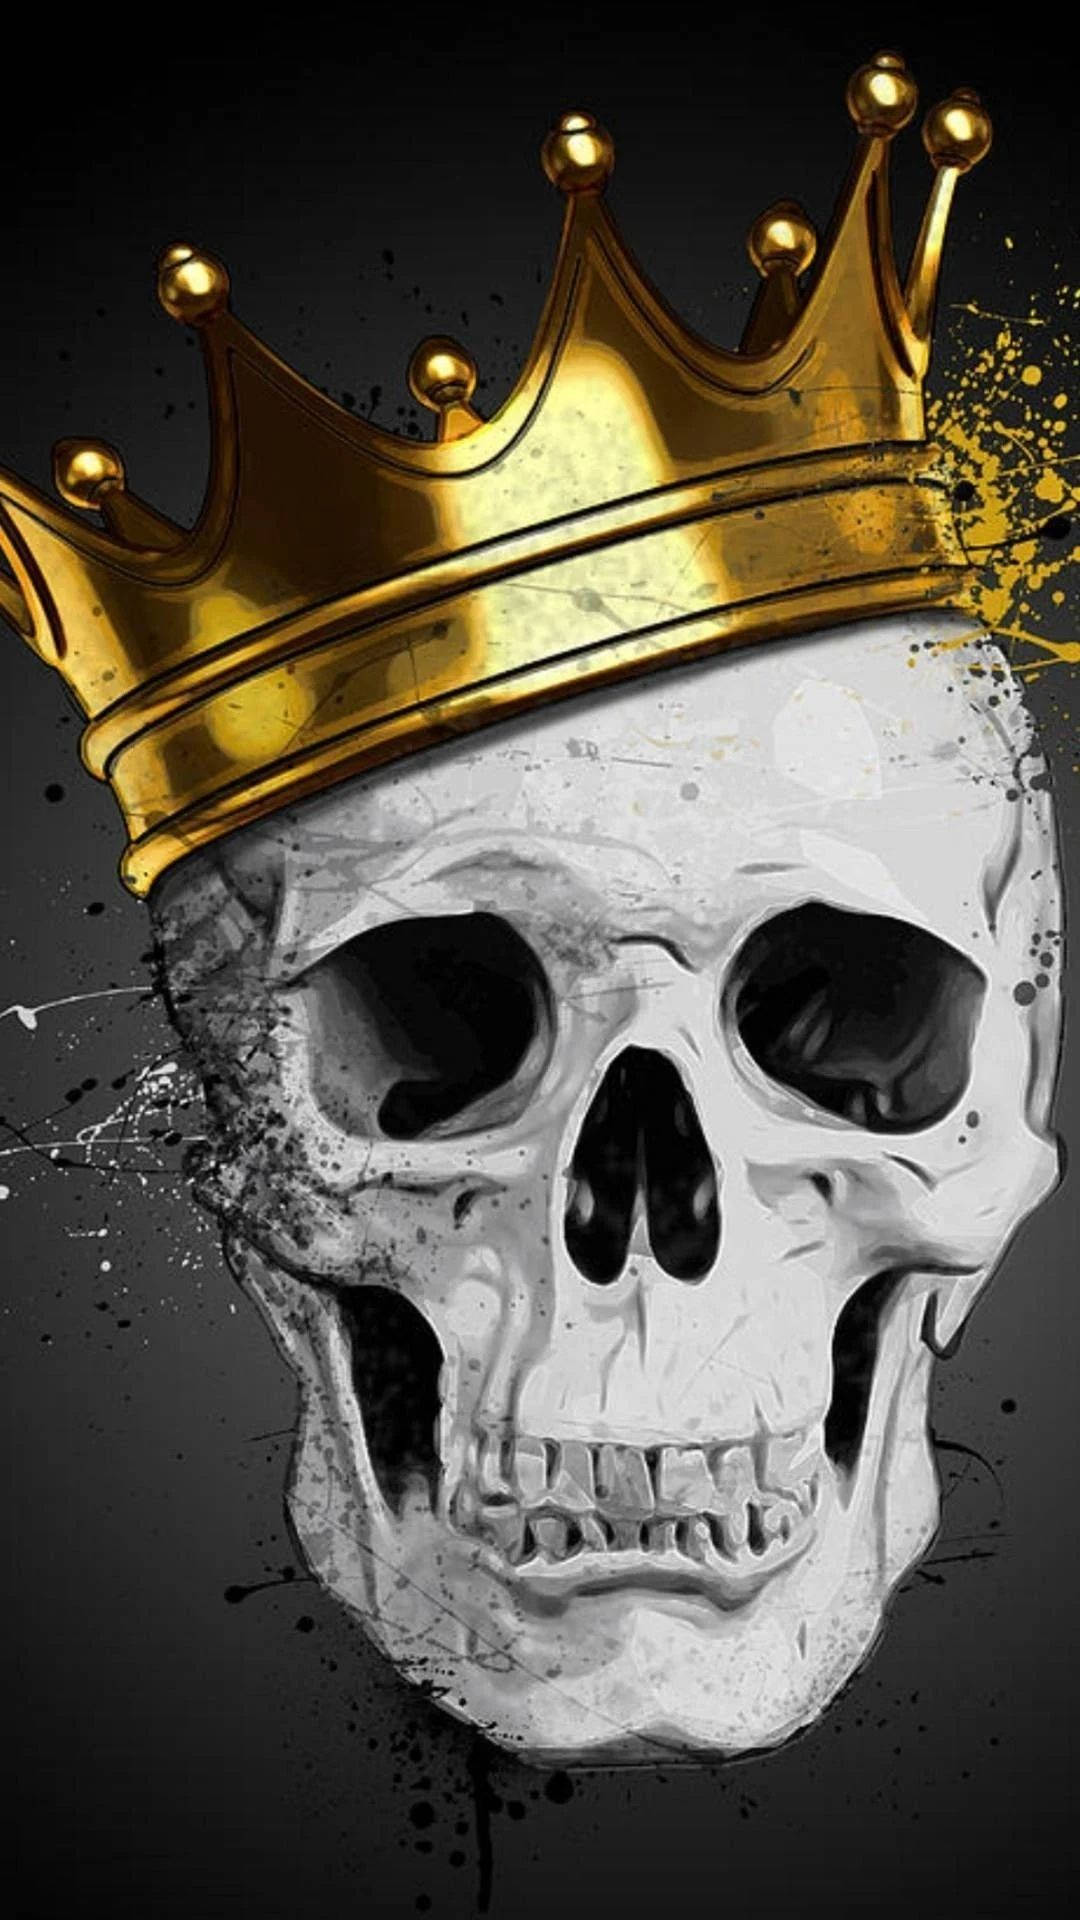 Skull King Wallpapers